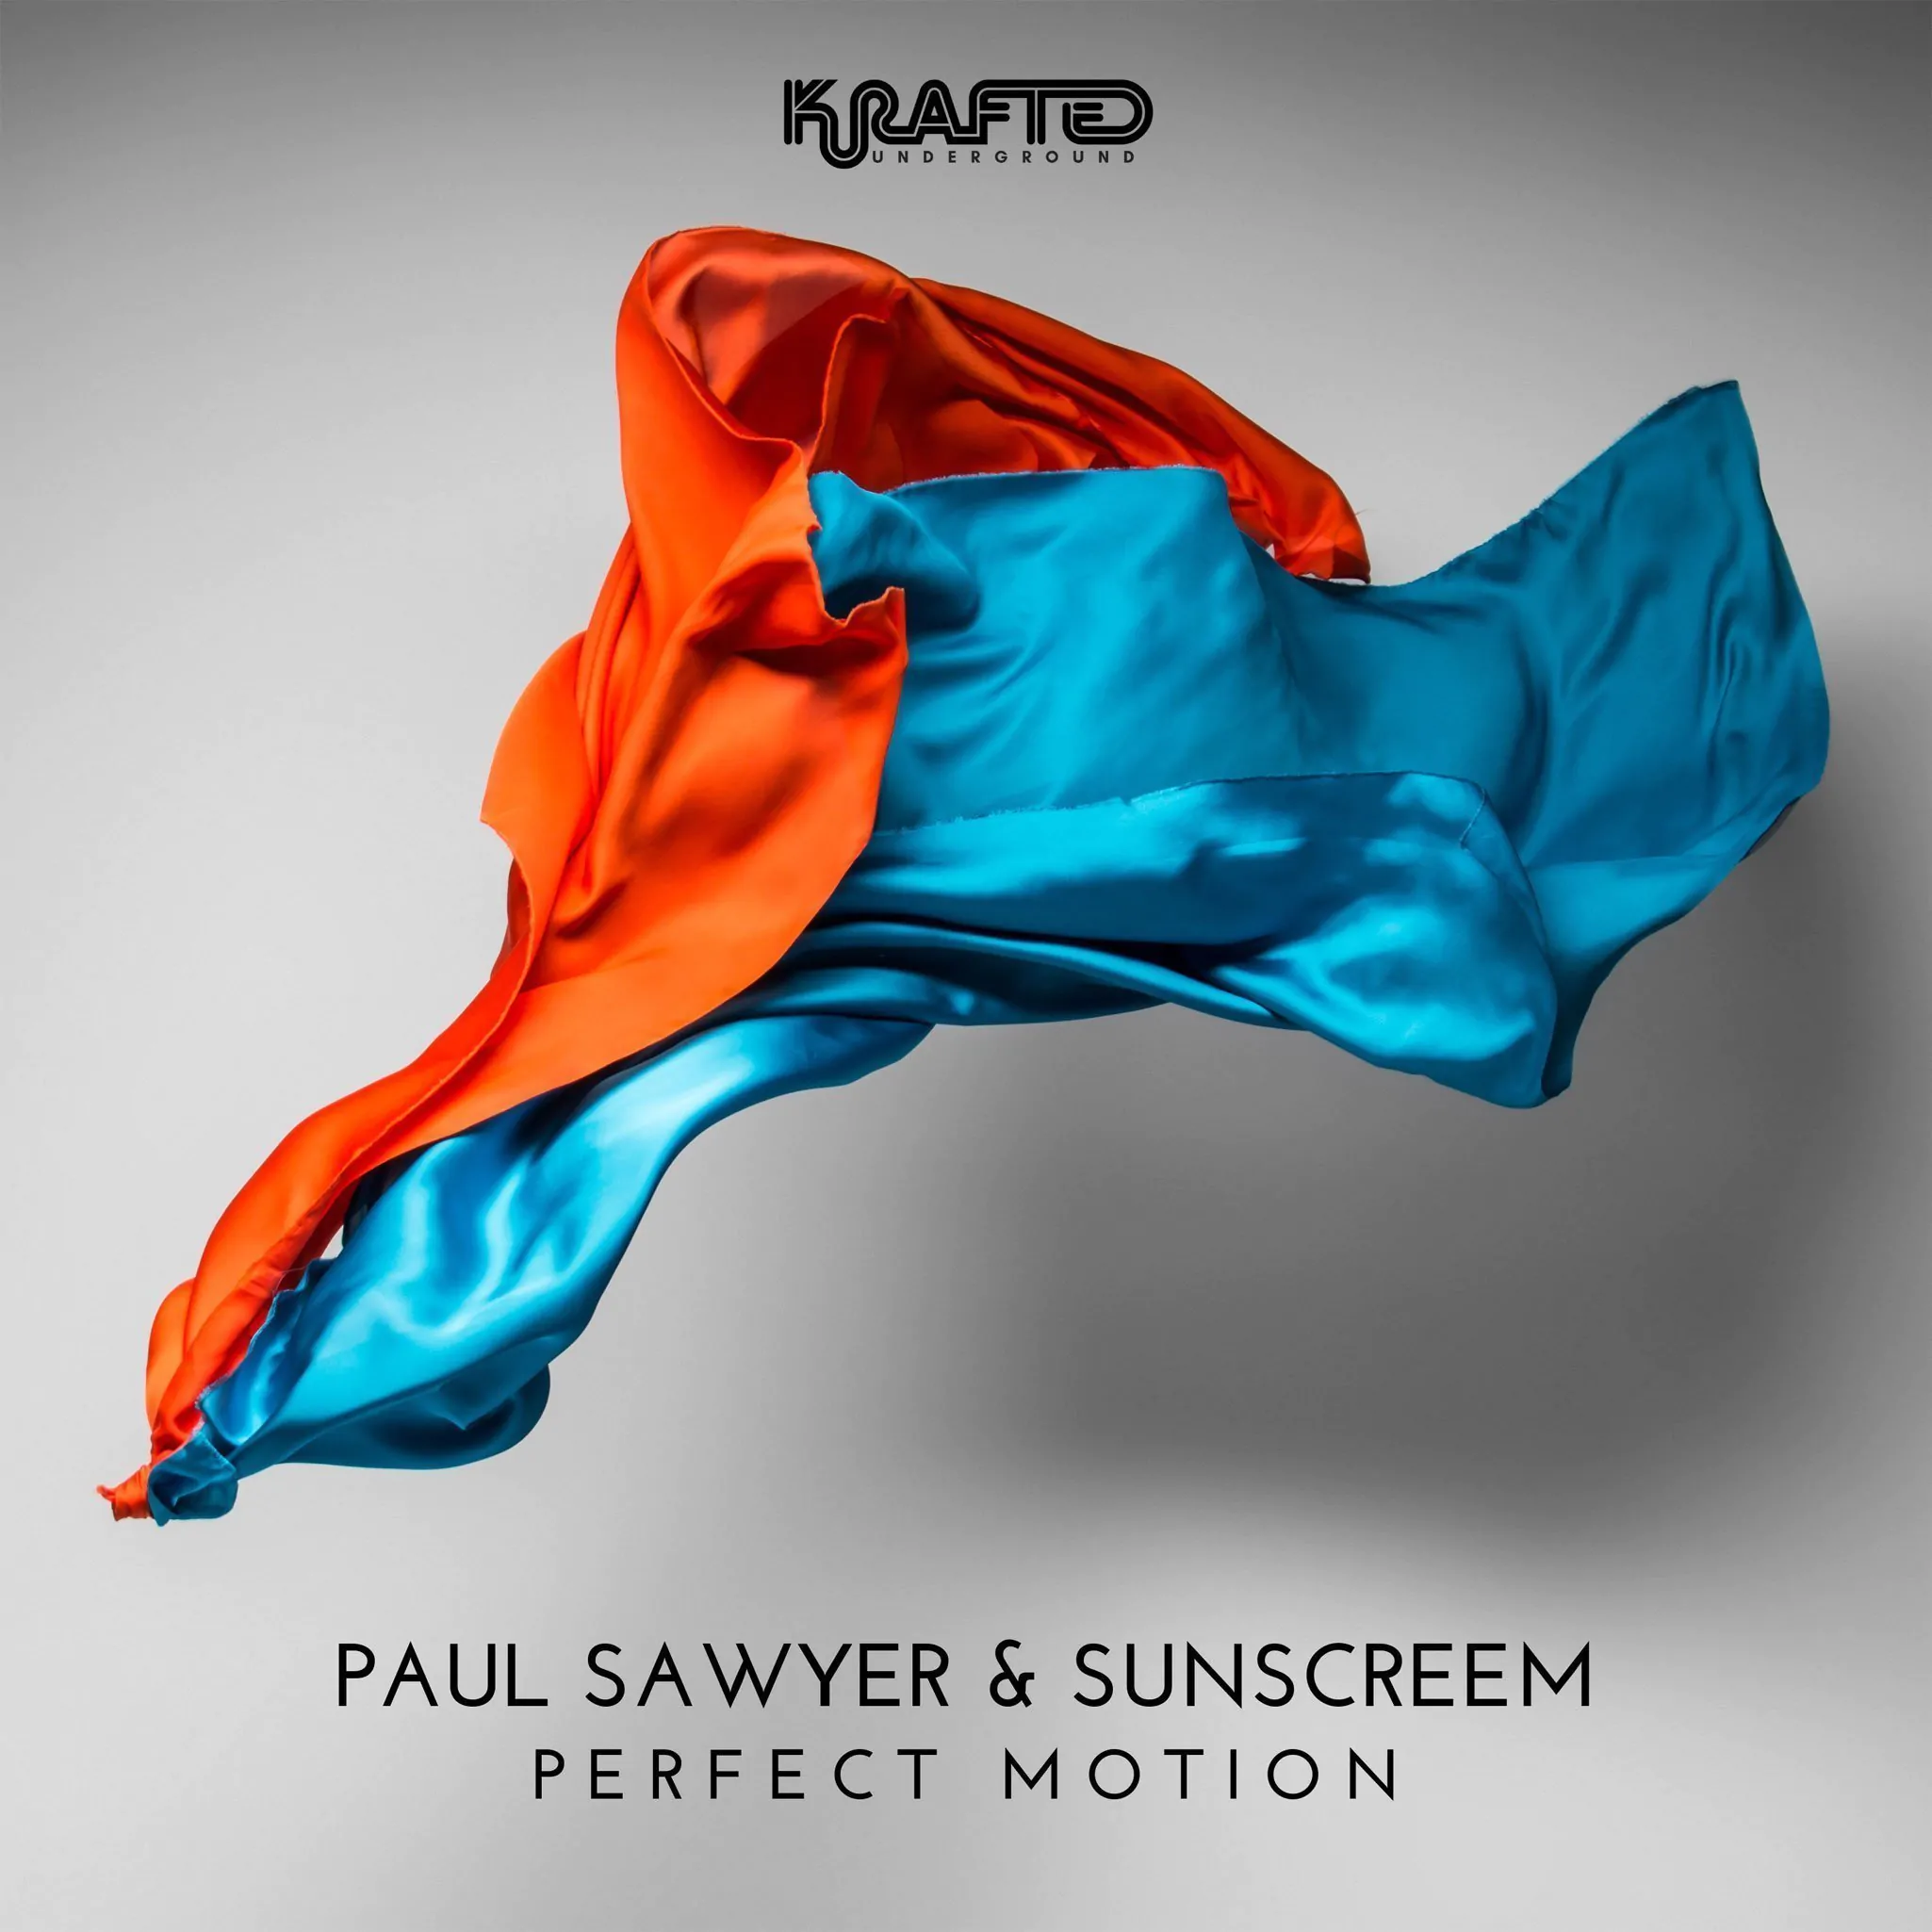 Paul Sawyer & Sunscreem release Perfect Motion (Krafted Underground) Mix – Listen Now